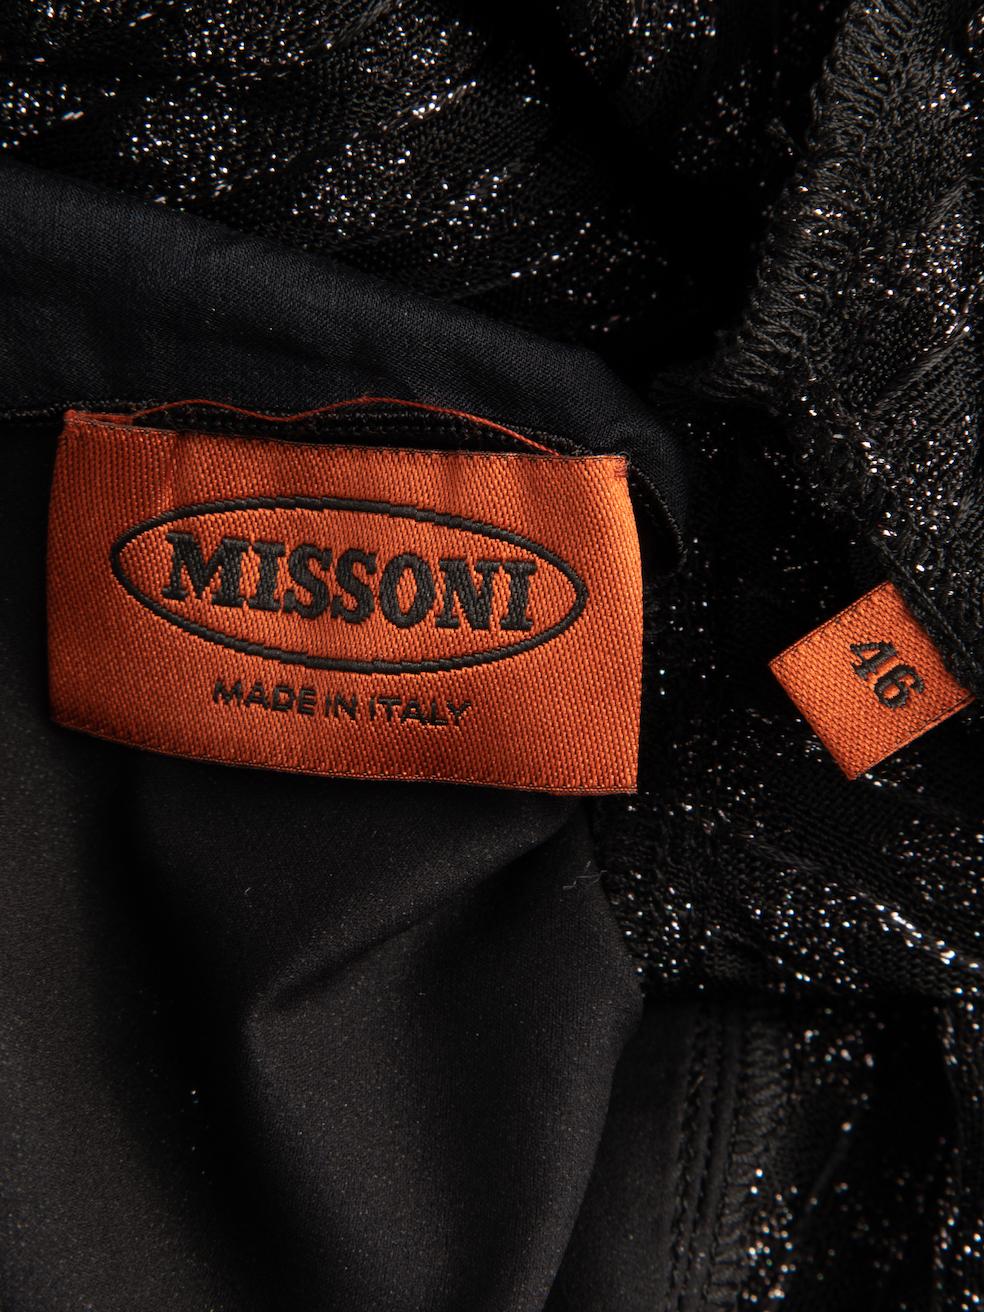 Pre-Loved Missoni Women's Black Mesh Neckline Metallic Houndstooth Top For Sale 1